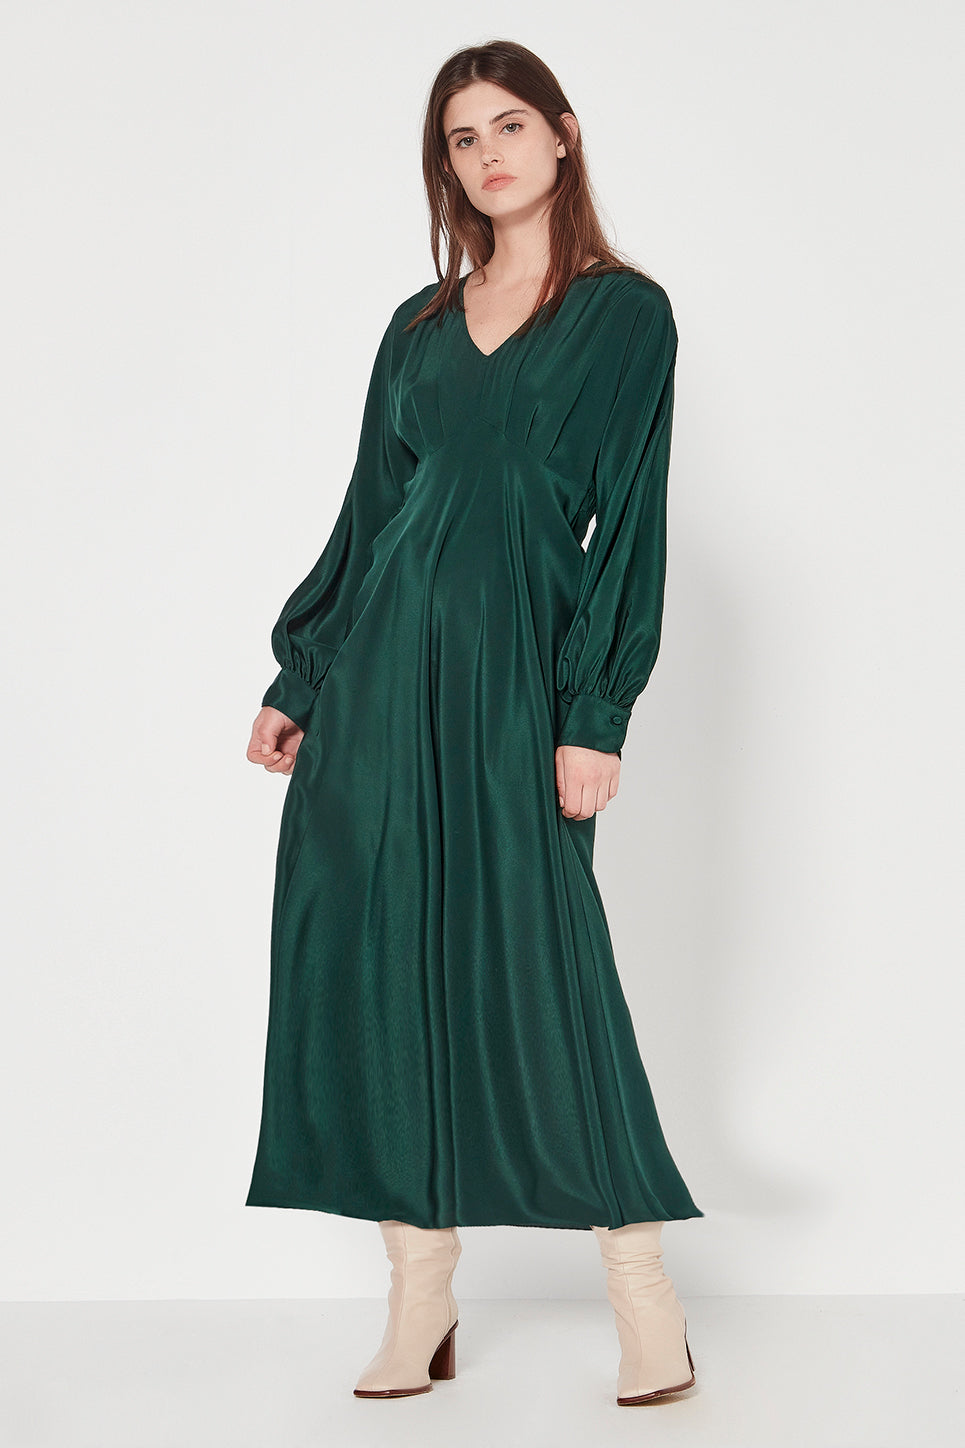 The Vionnet Dress in Emerald